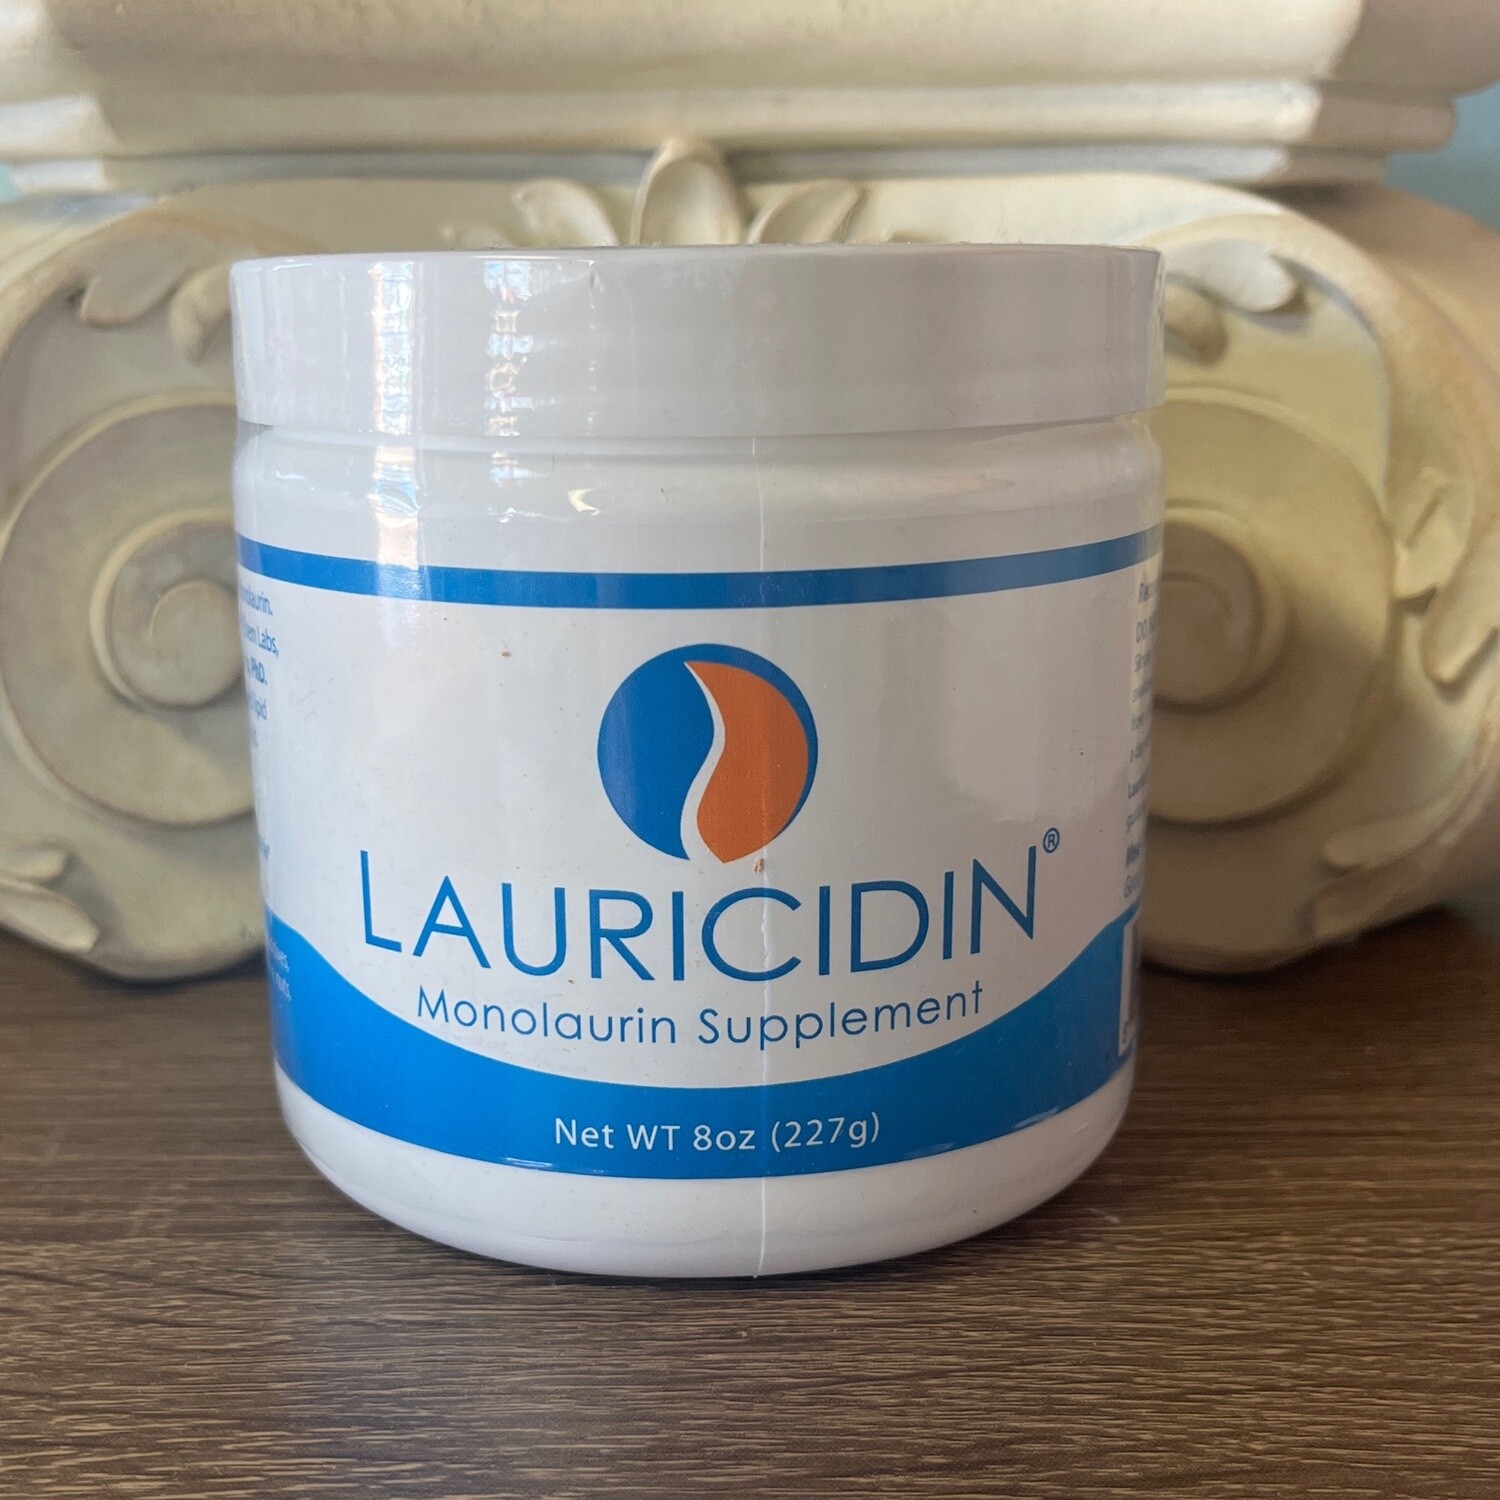 Lauricidin®- The Original Monolaurin Supplement- 3000mg per Serving- 227g per Jar